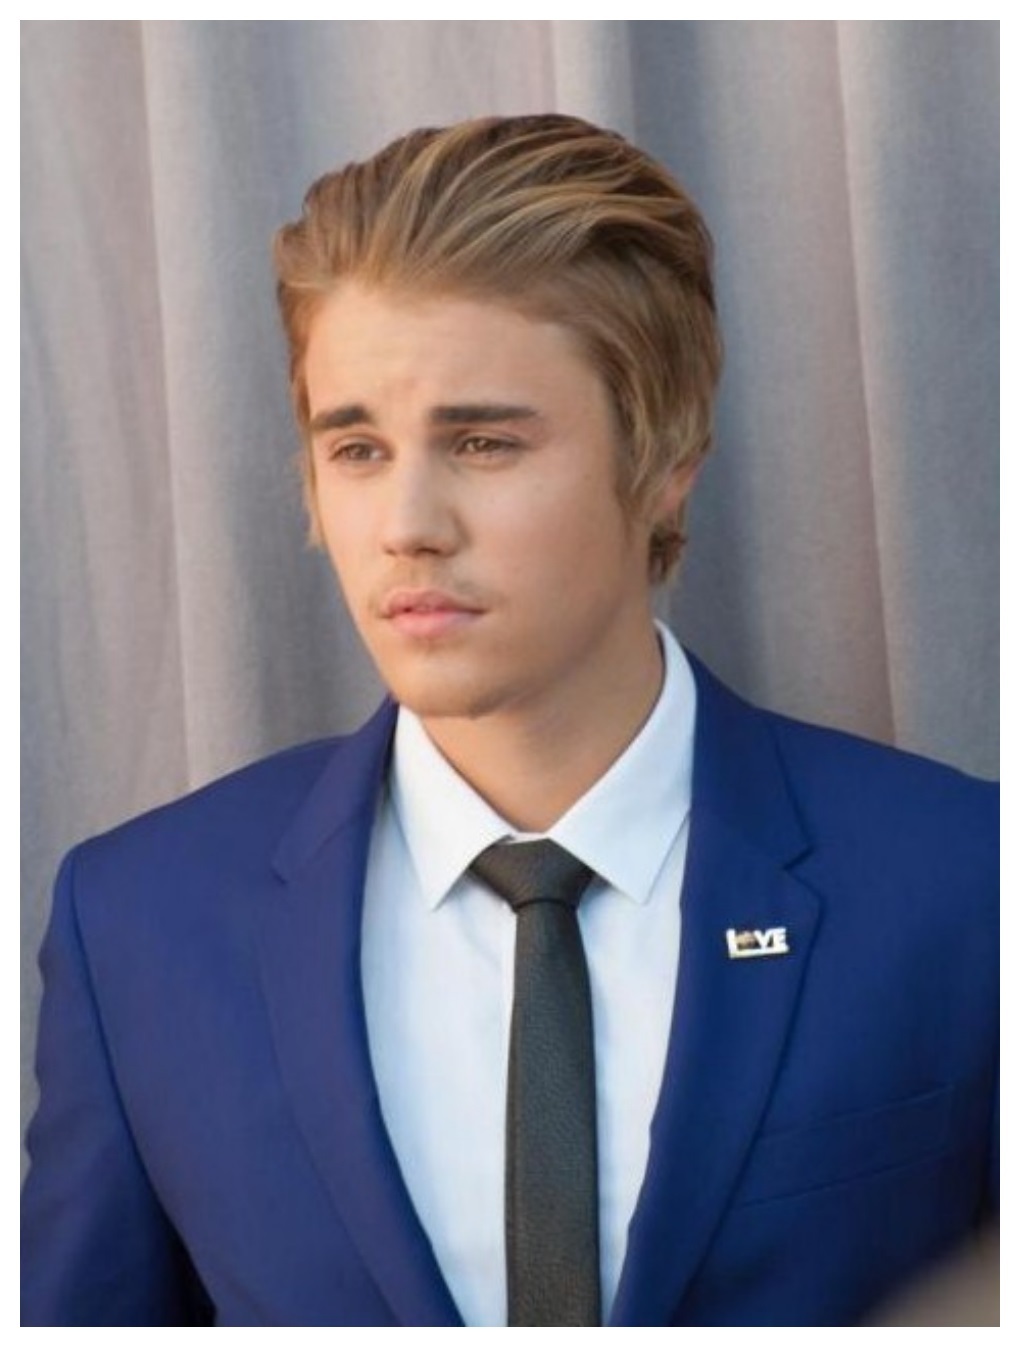 Attractive Justin Bieber Hairstyle free